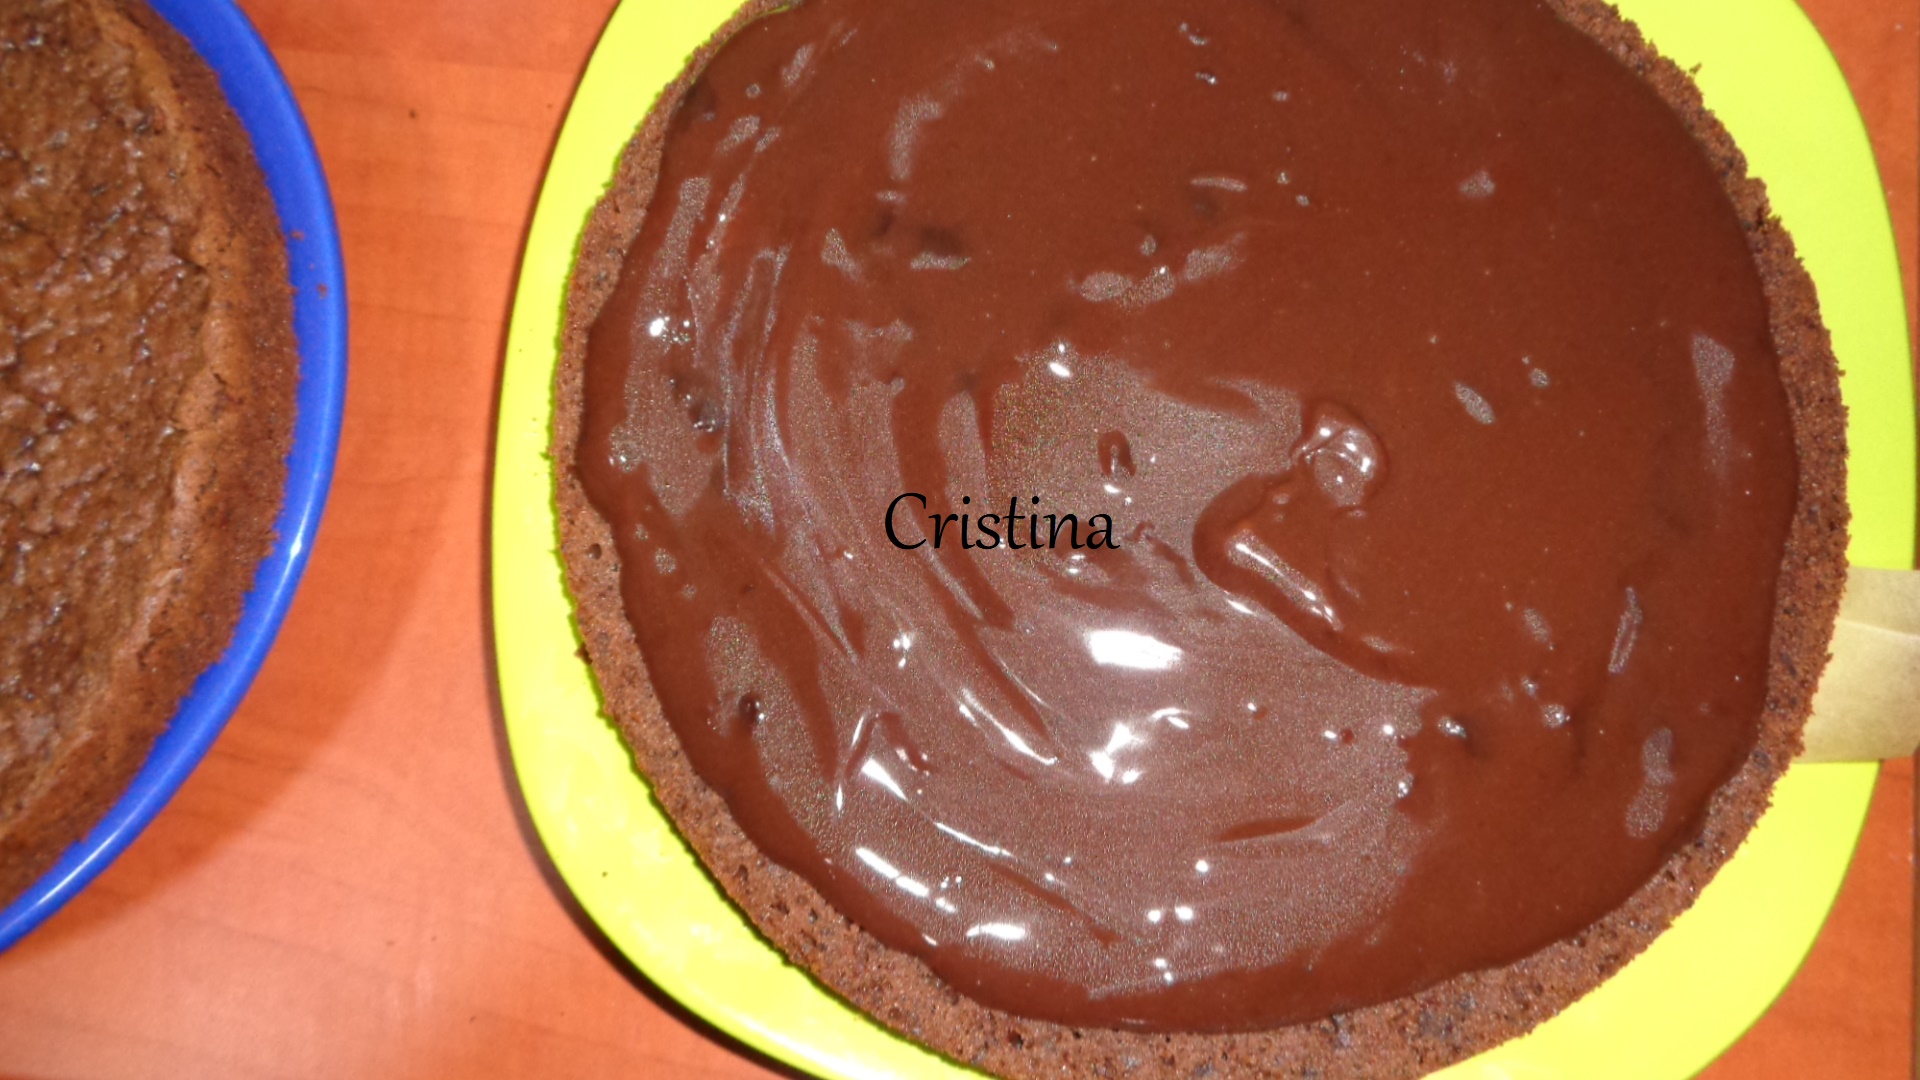 Desert tort de ciocolata